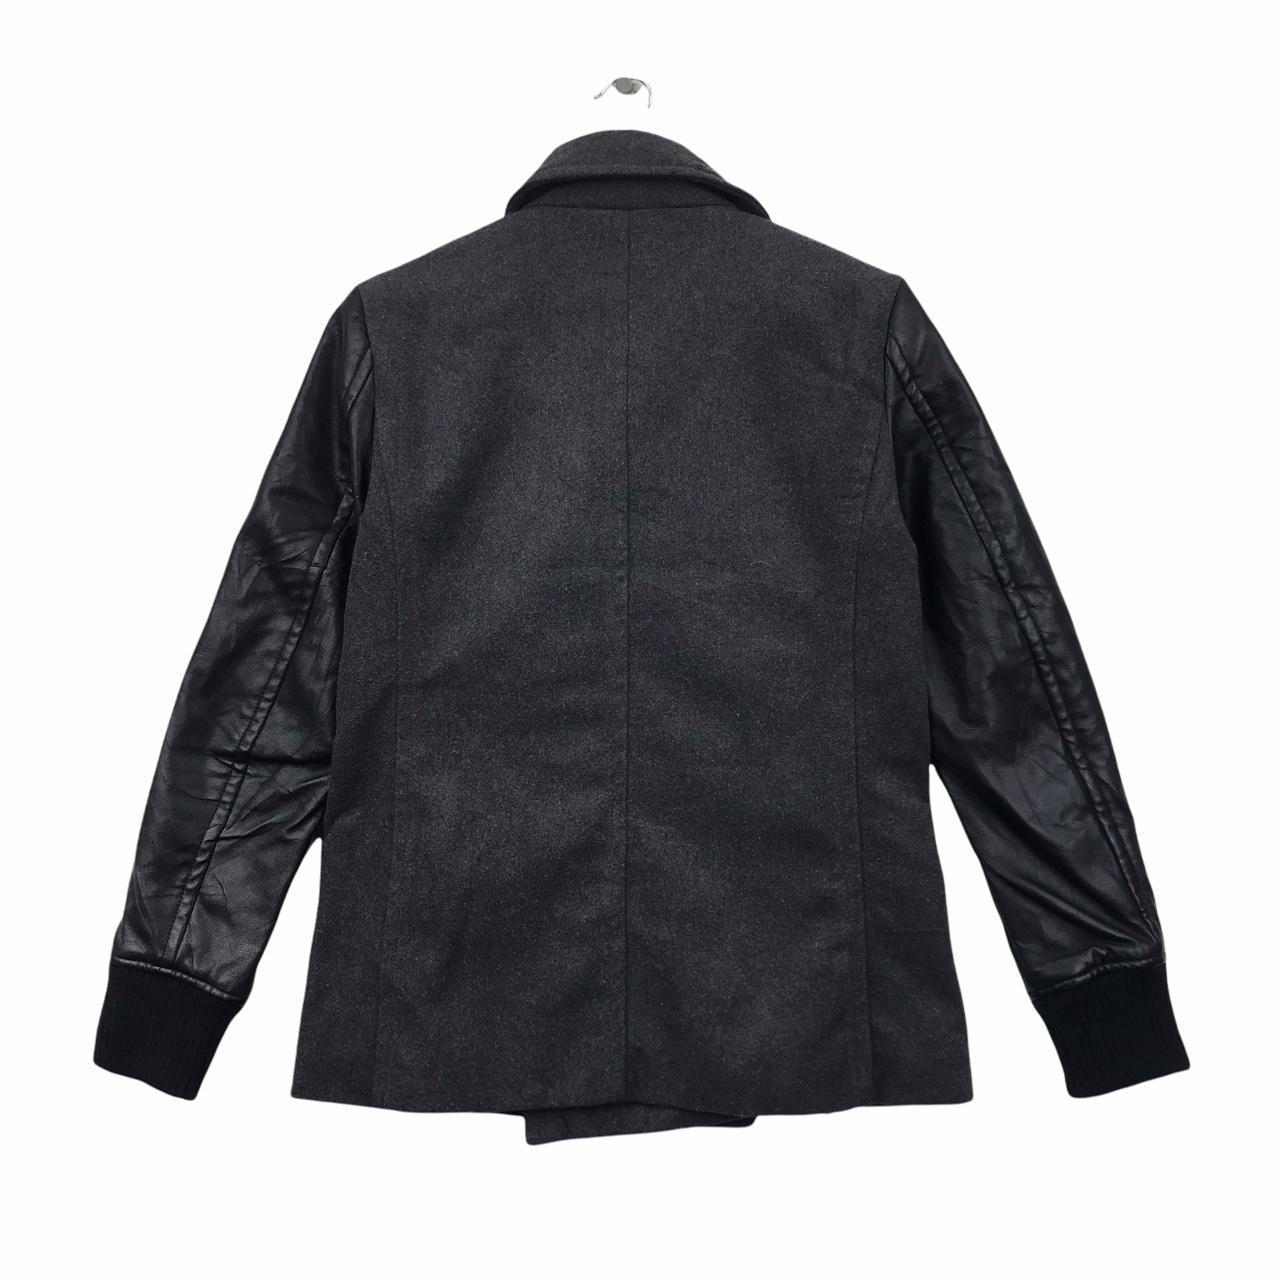 IMP Japanese Brand Polyester Varsity Jacket Coat... - Depop